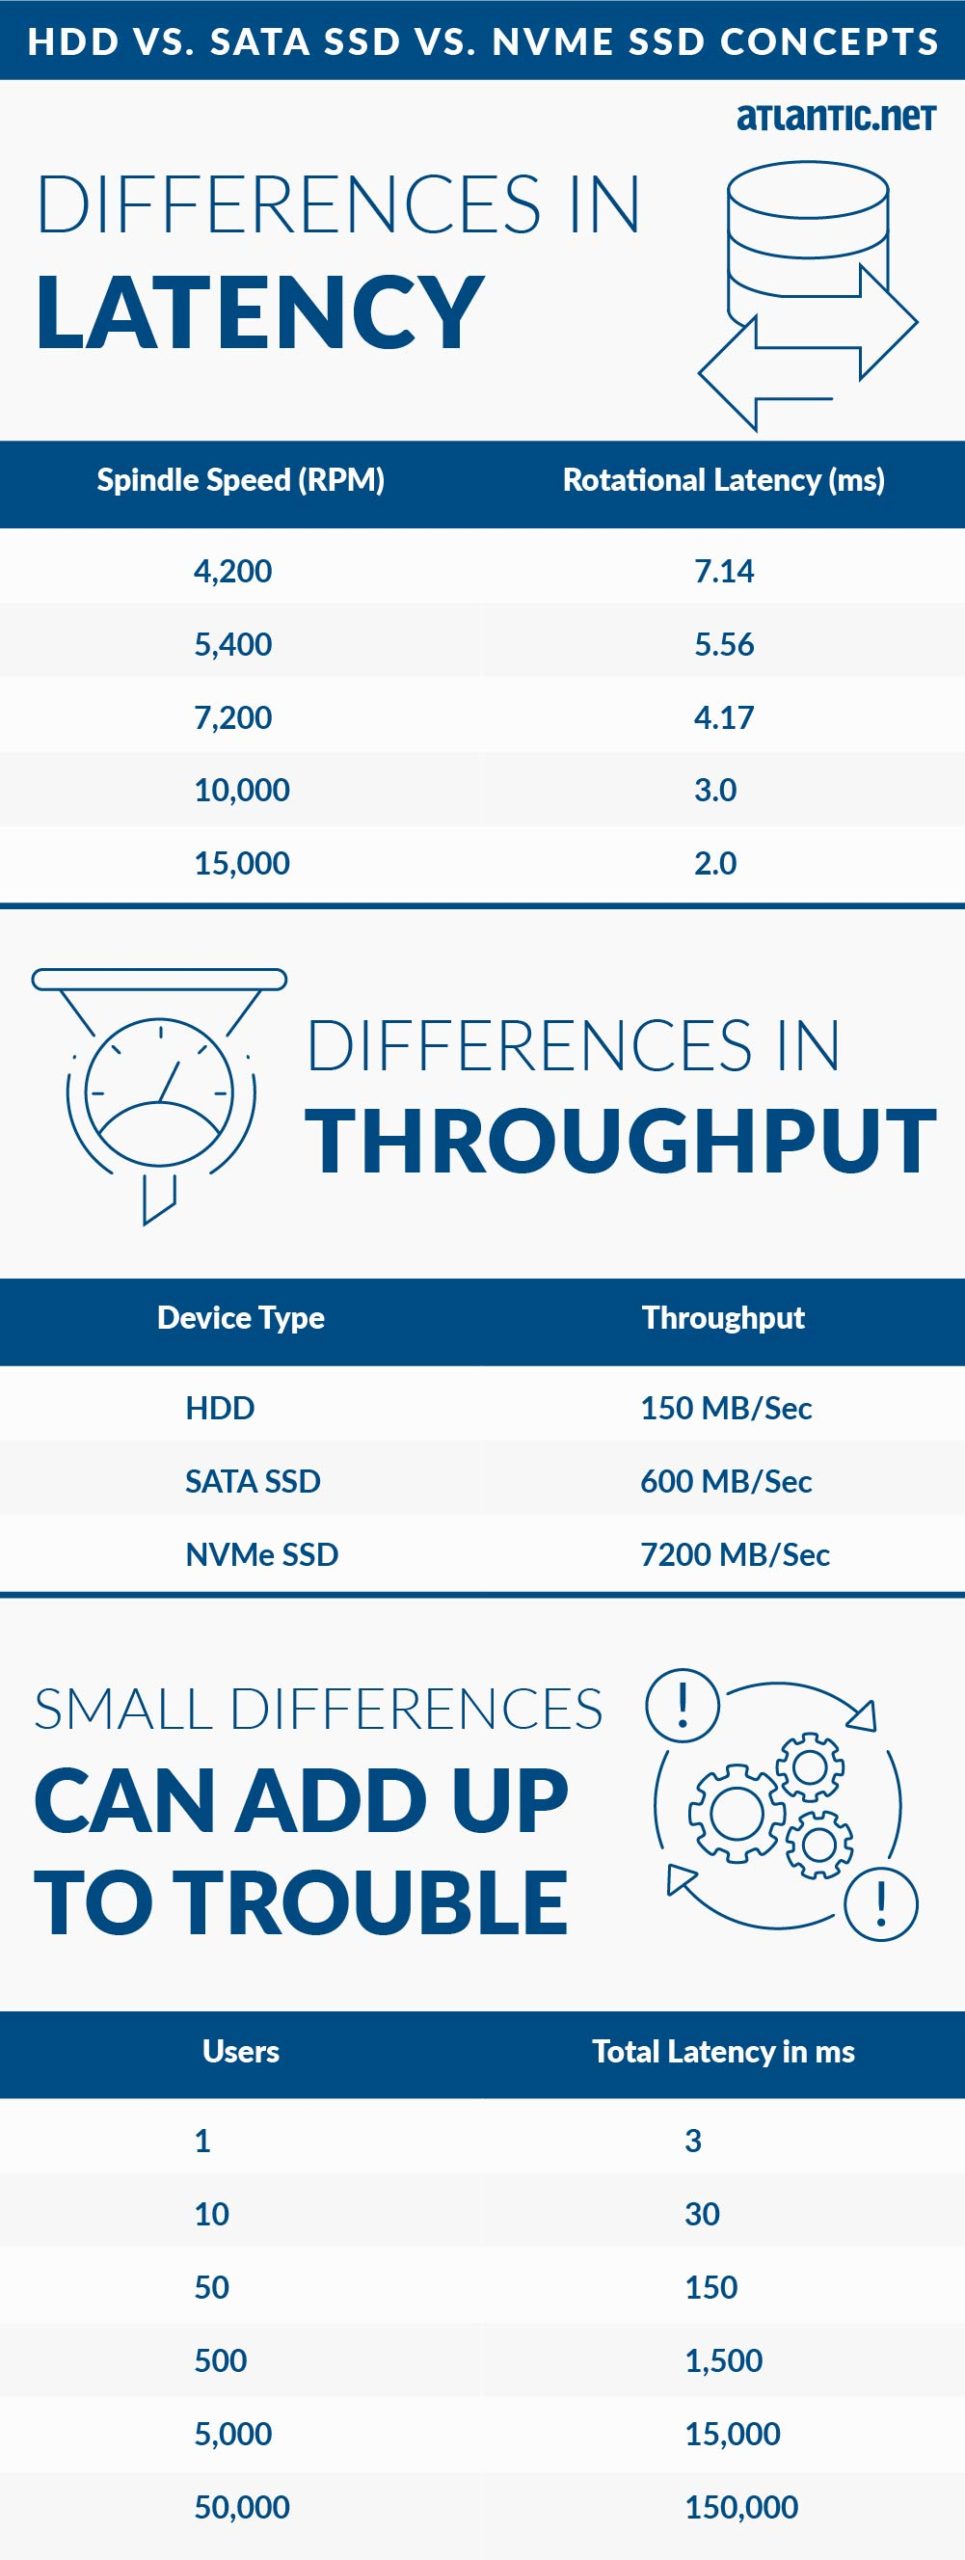 HDD vs vs NVMe SSD Concepts